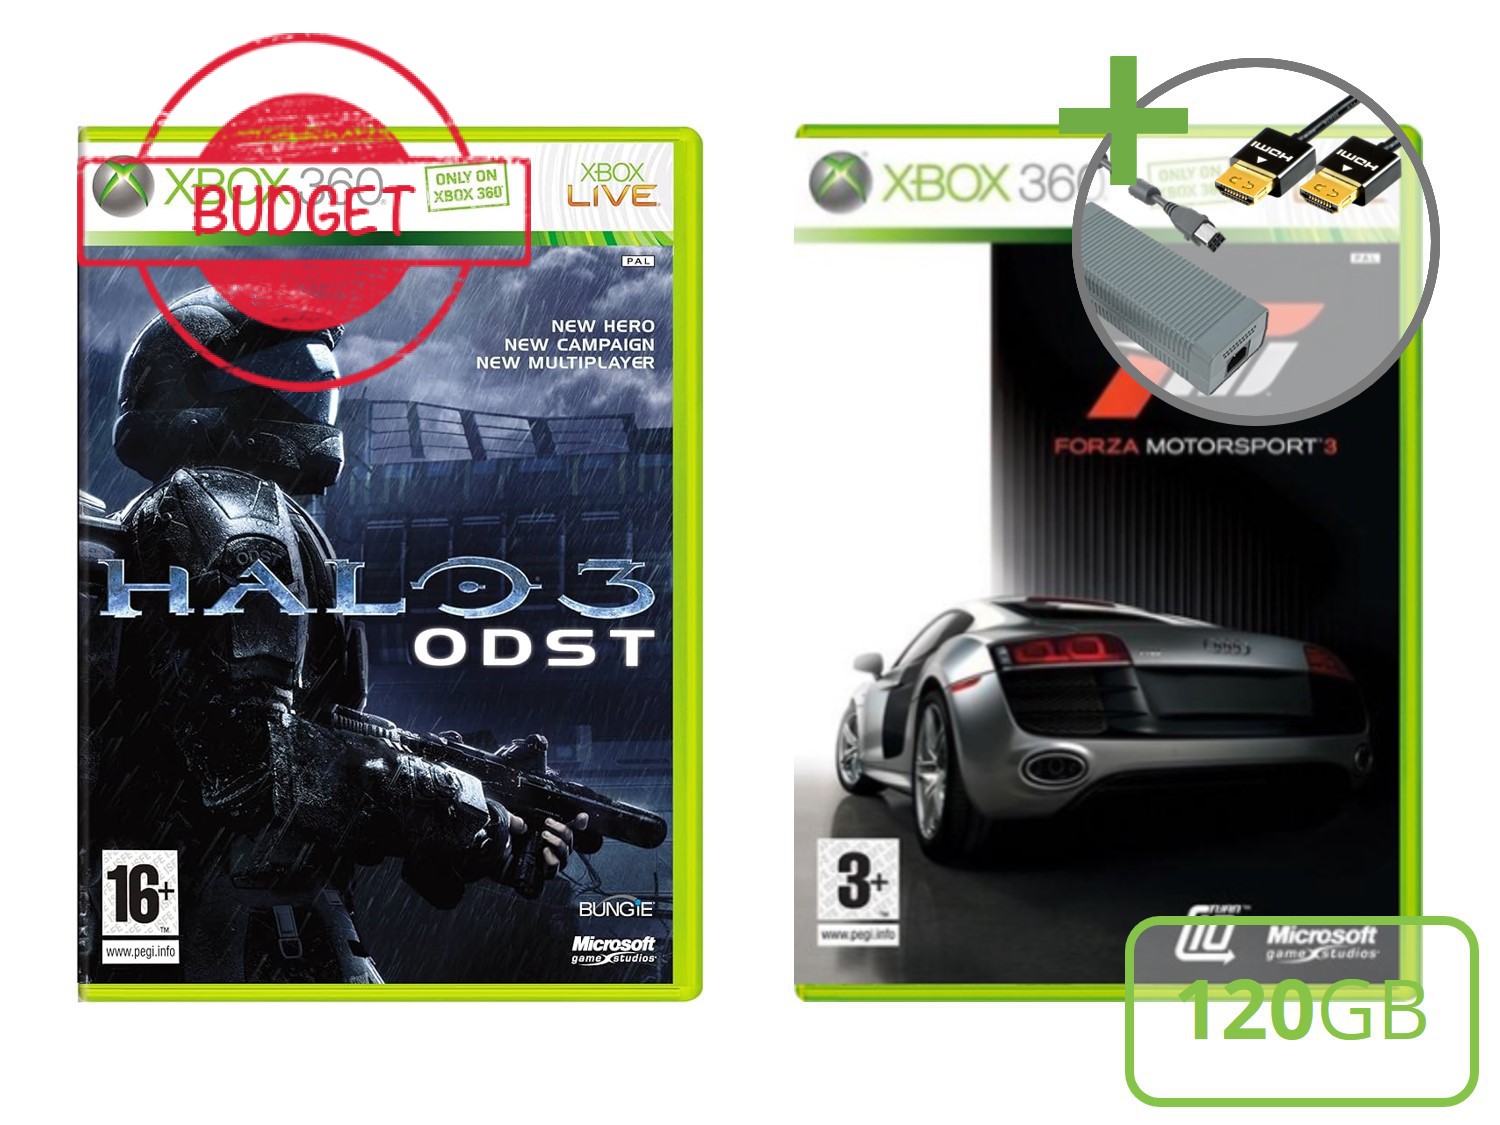 Microsoft Xbox 360 Elite Starter Pack - Forza Motorsport 3 and Halo 3: ODST Edition - Budget - Xbox 360 Hardware - 5